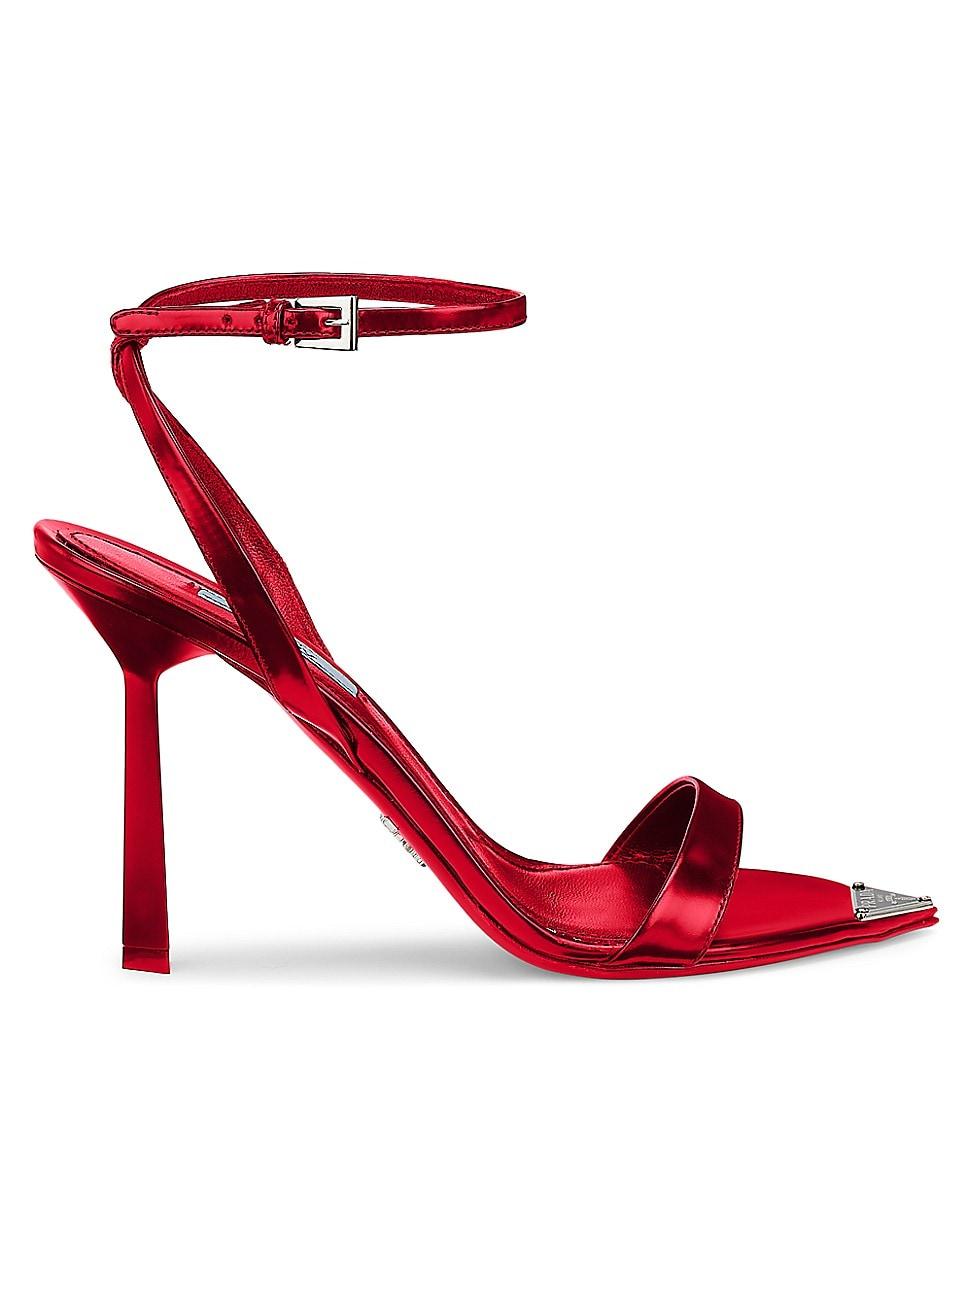 Prada Metallic Leather High-heel Sandals in Red | Lyst